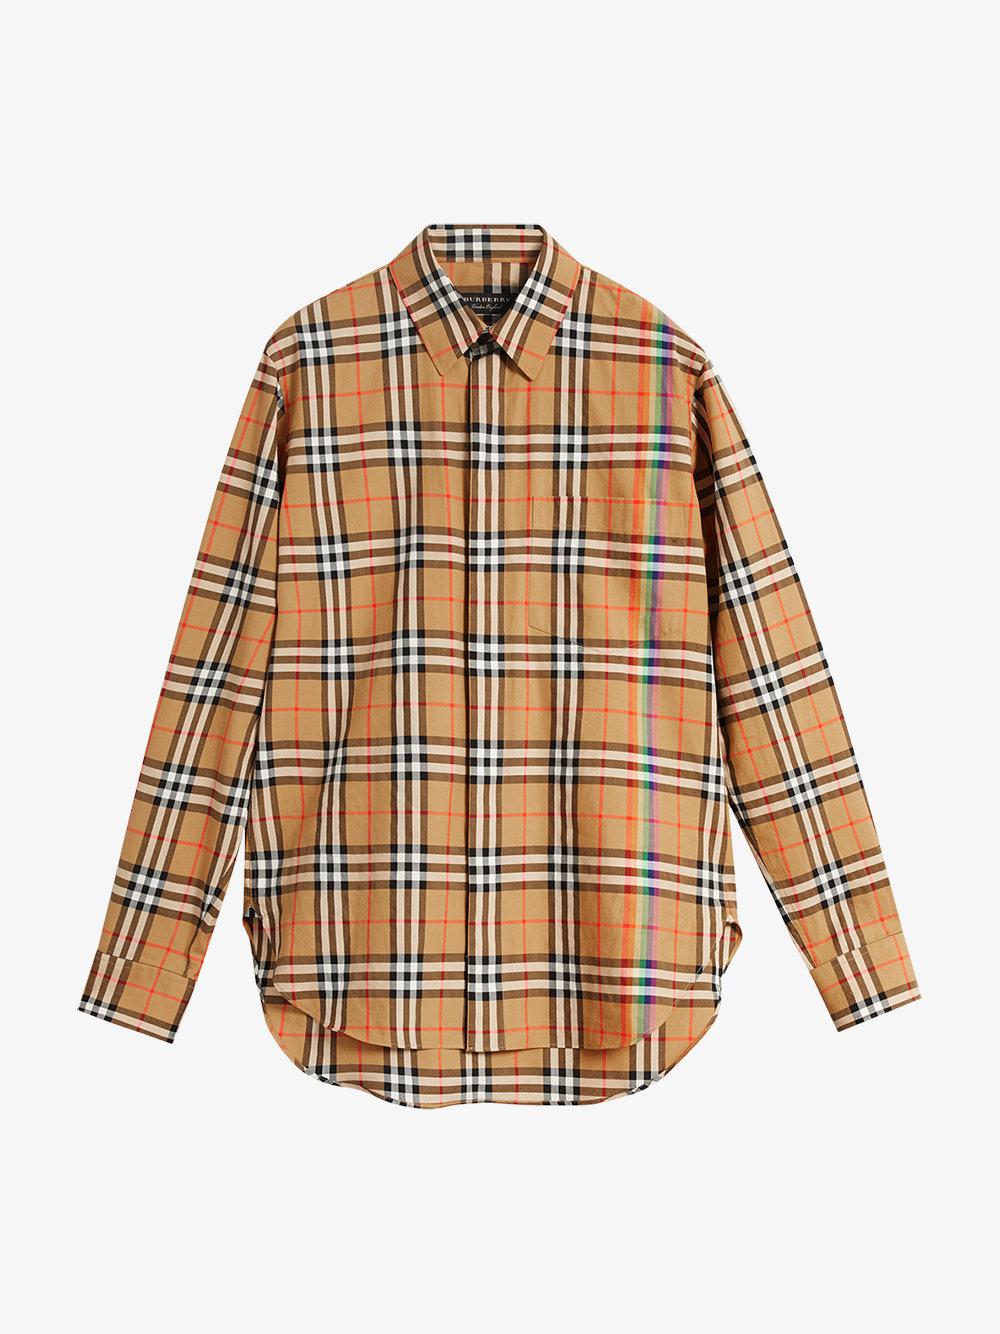 sensor suppe Mig selv Burberry Rainbow Vintage Check Shirt for Men - Lyst